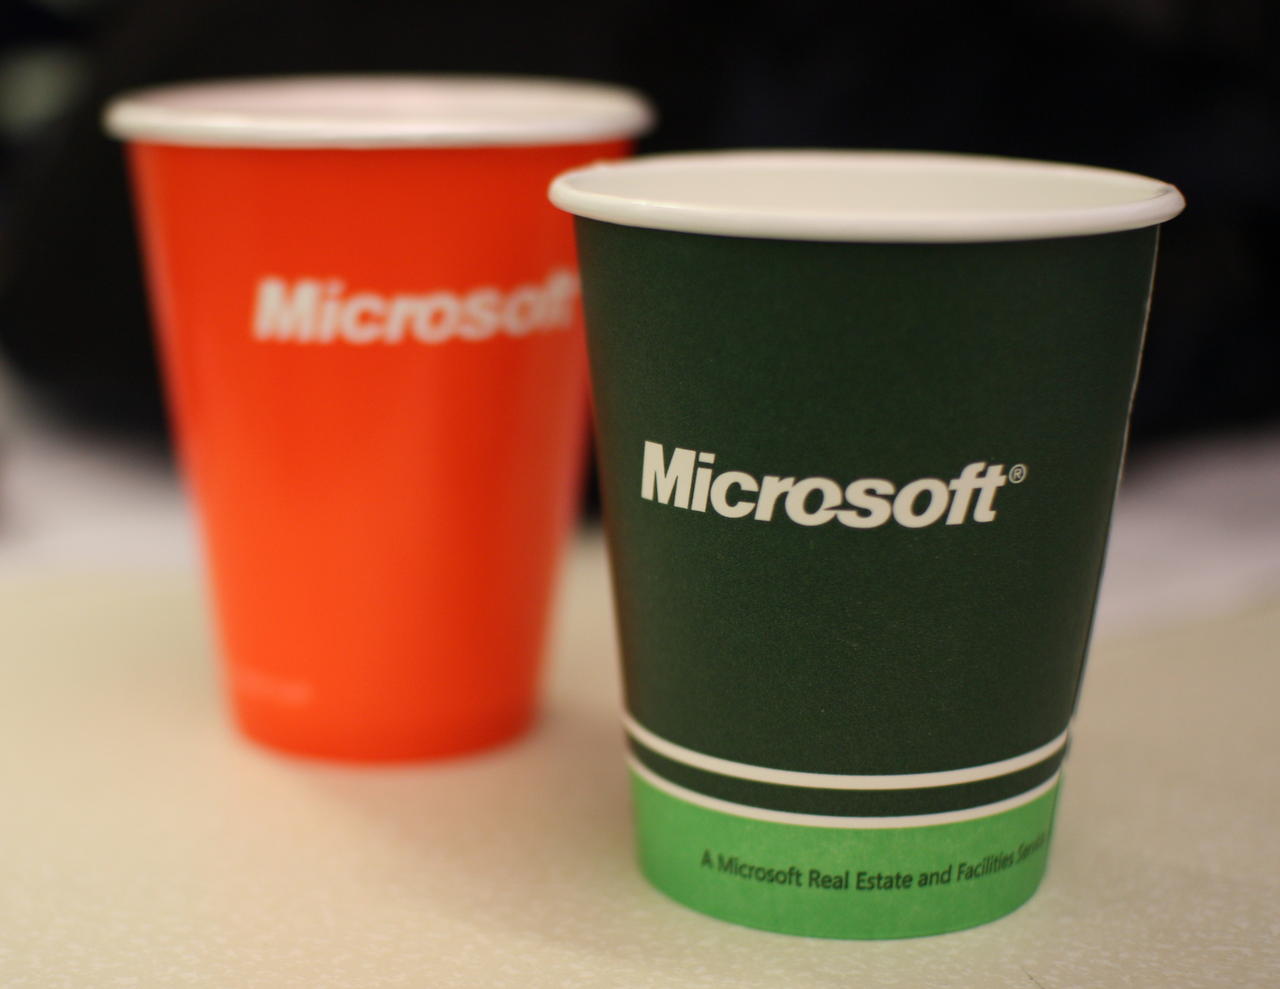 The Microsoft Cup Change